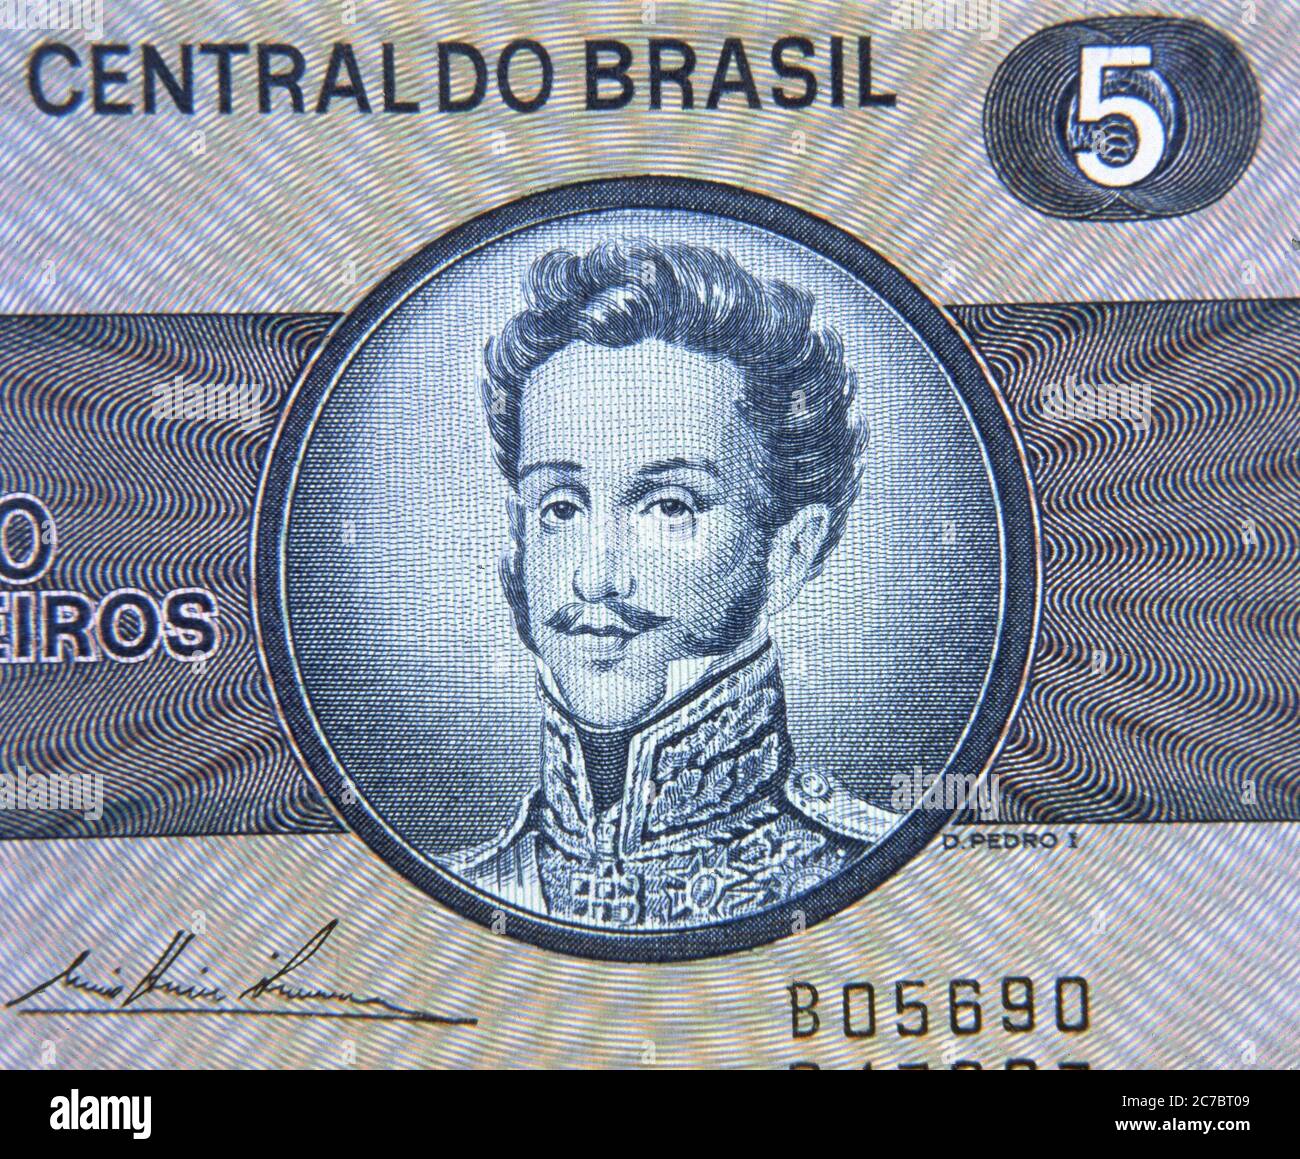 RITRATO DE PEDRO I DE BRASIL Y IV DE PORTUGAL 1798-1834 IT UN BILLETE DE 5 CRUZEIROS BRASILEÑOS. PEDRO IV. DEL PORTOGALLO. PEDRO I DE BRASIL Y IV PORTOGALLO. BRAGANZA PEDRO. Foto Stock